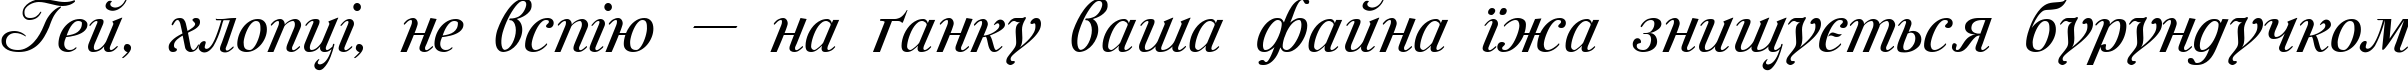 Пример написания шрифтом Mon Amour One Medium текста на украинском